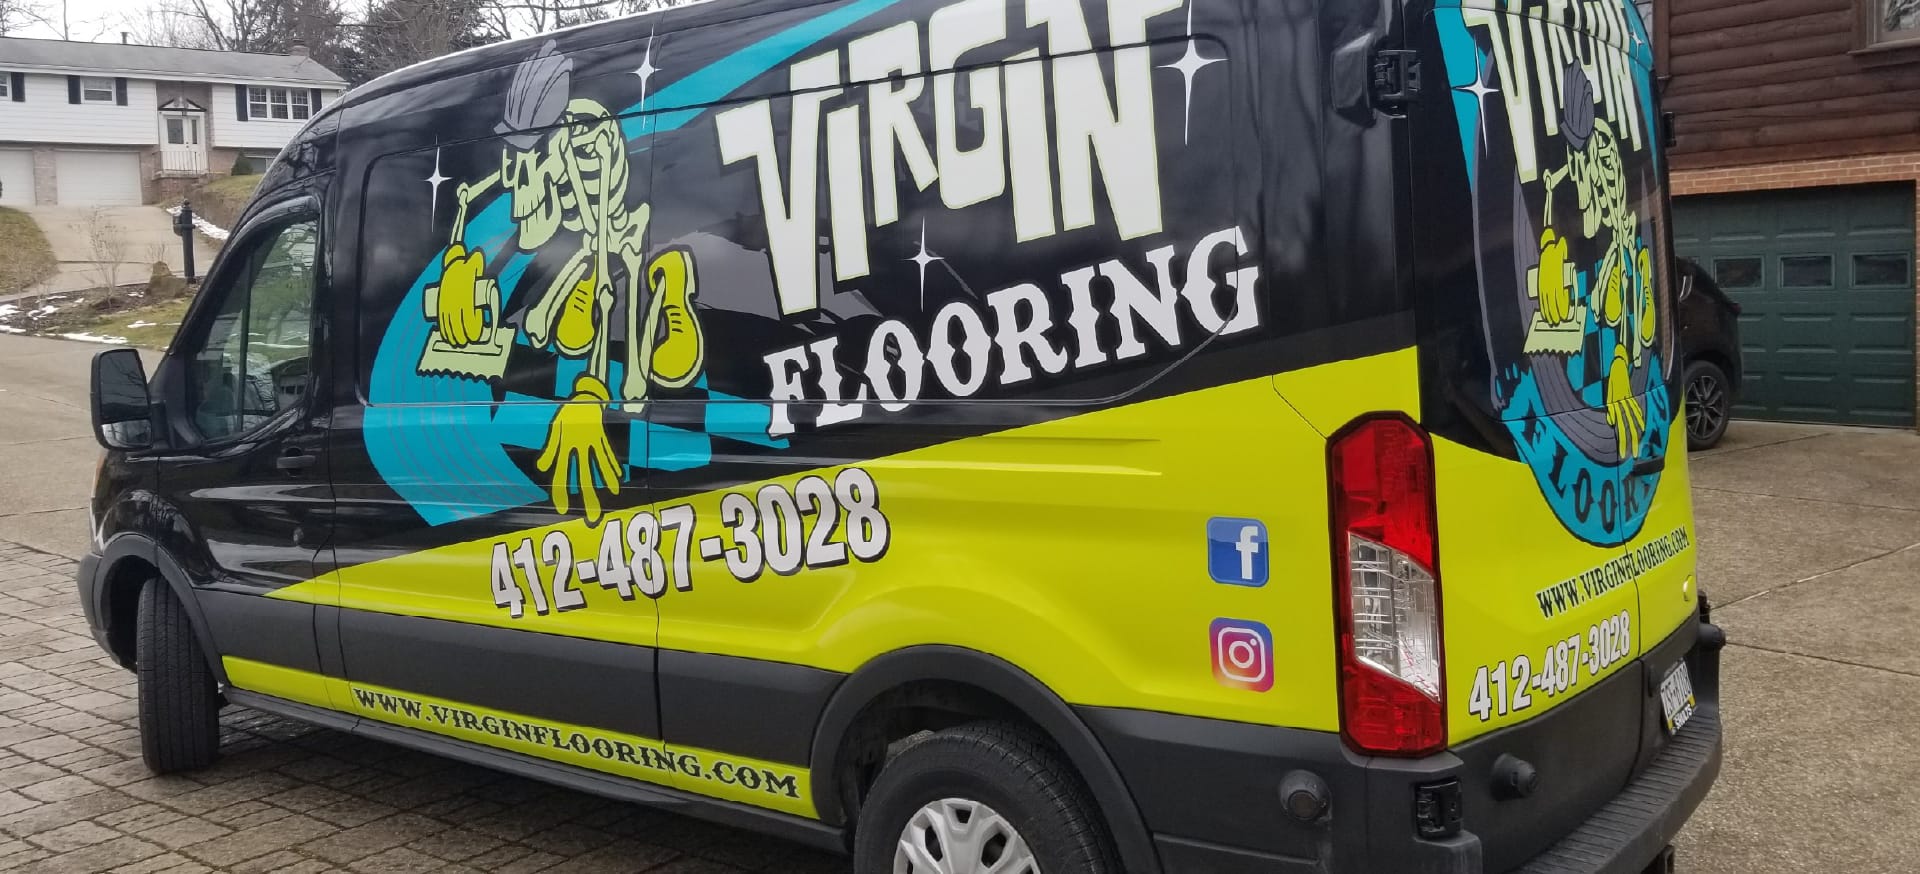 Virgin Flooring installation vehicle